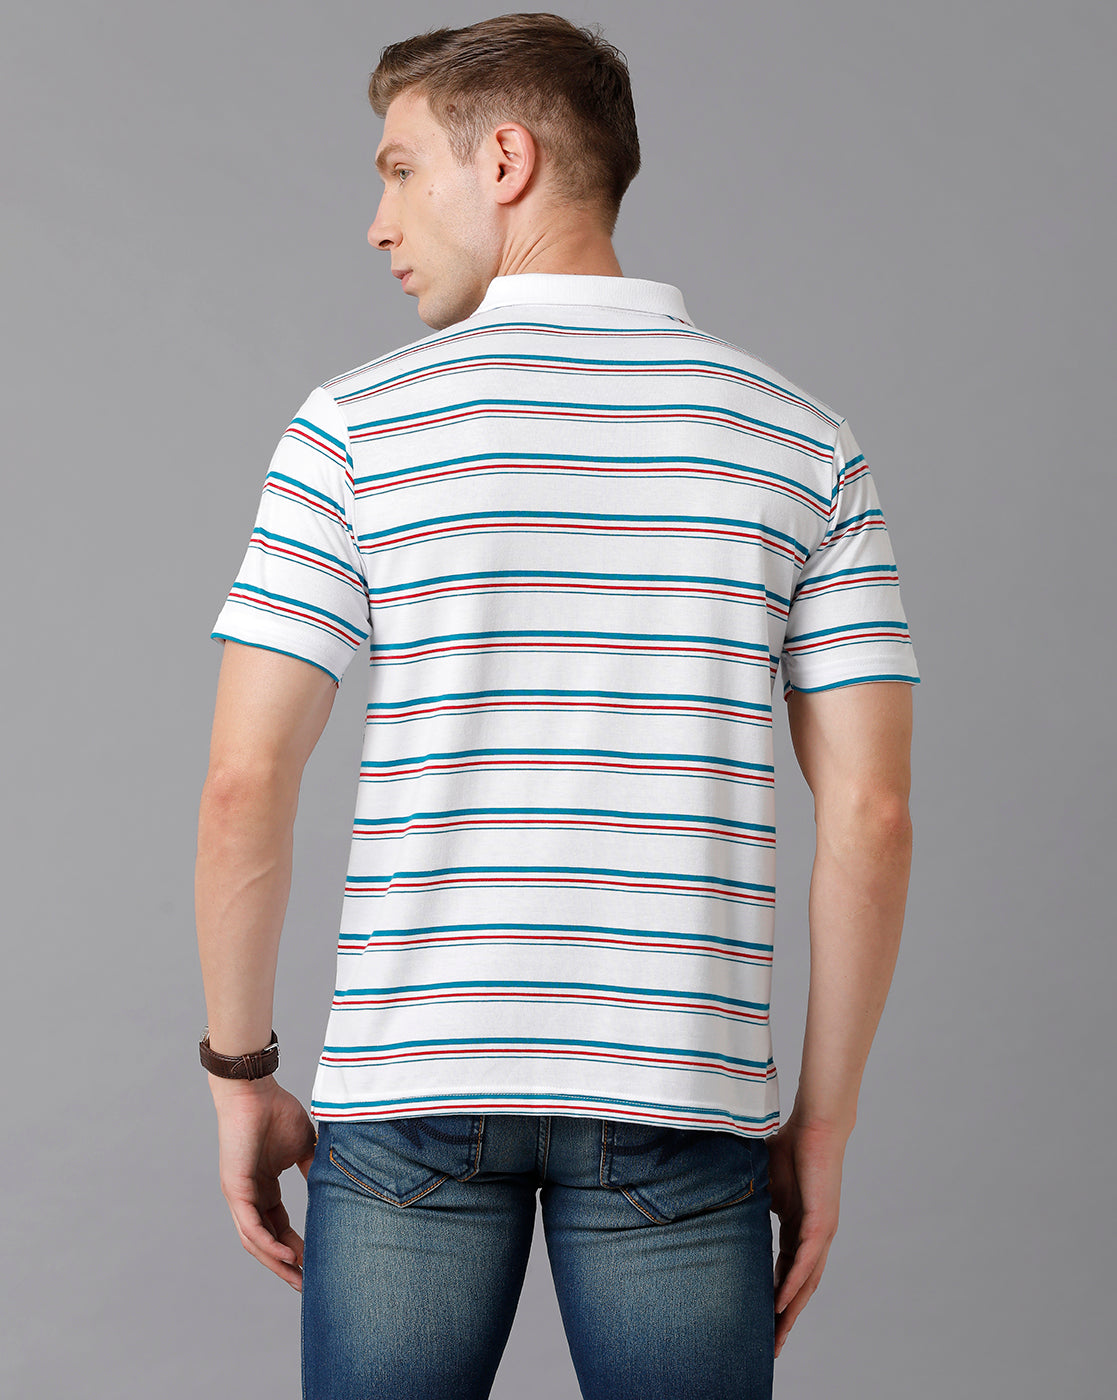 Classic Polo Men's Cotton Blend Striped Authentic Fit White T-Shirt | Avon - 495 A